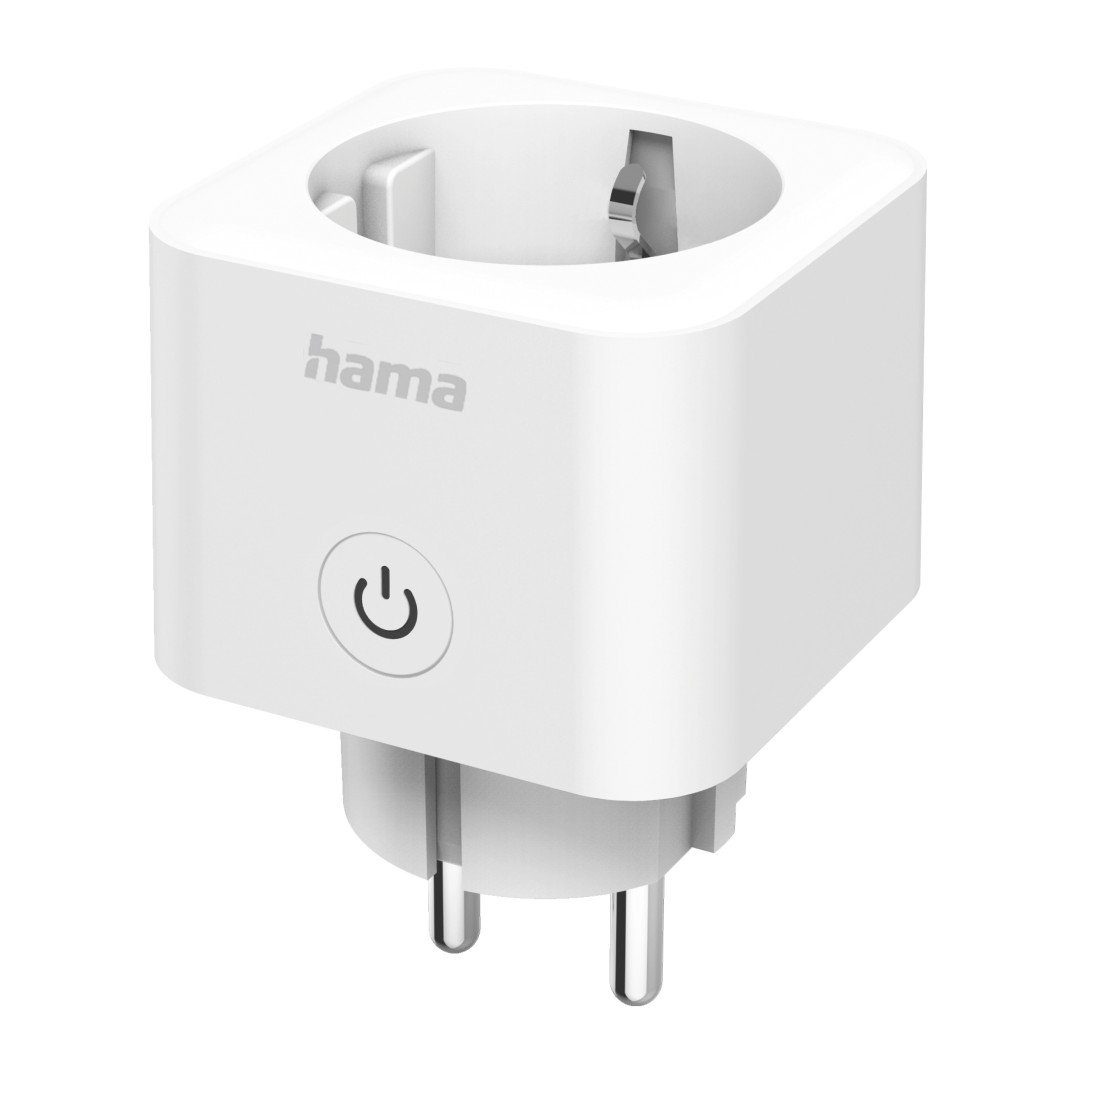 Hama WLAN-Steckdose Home, Matter Steckdose App (smarte WLAN-Steckdose 1-St. 3680W), mit mit Smart